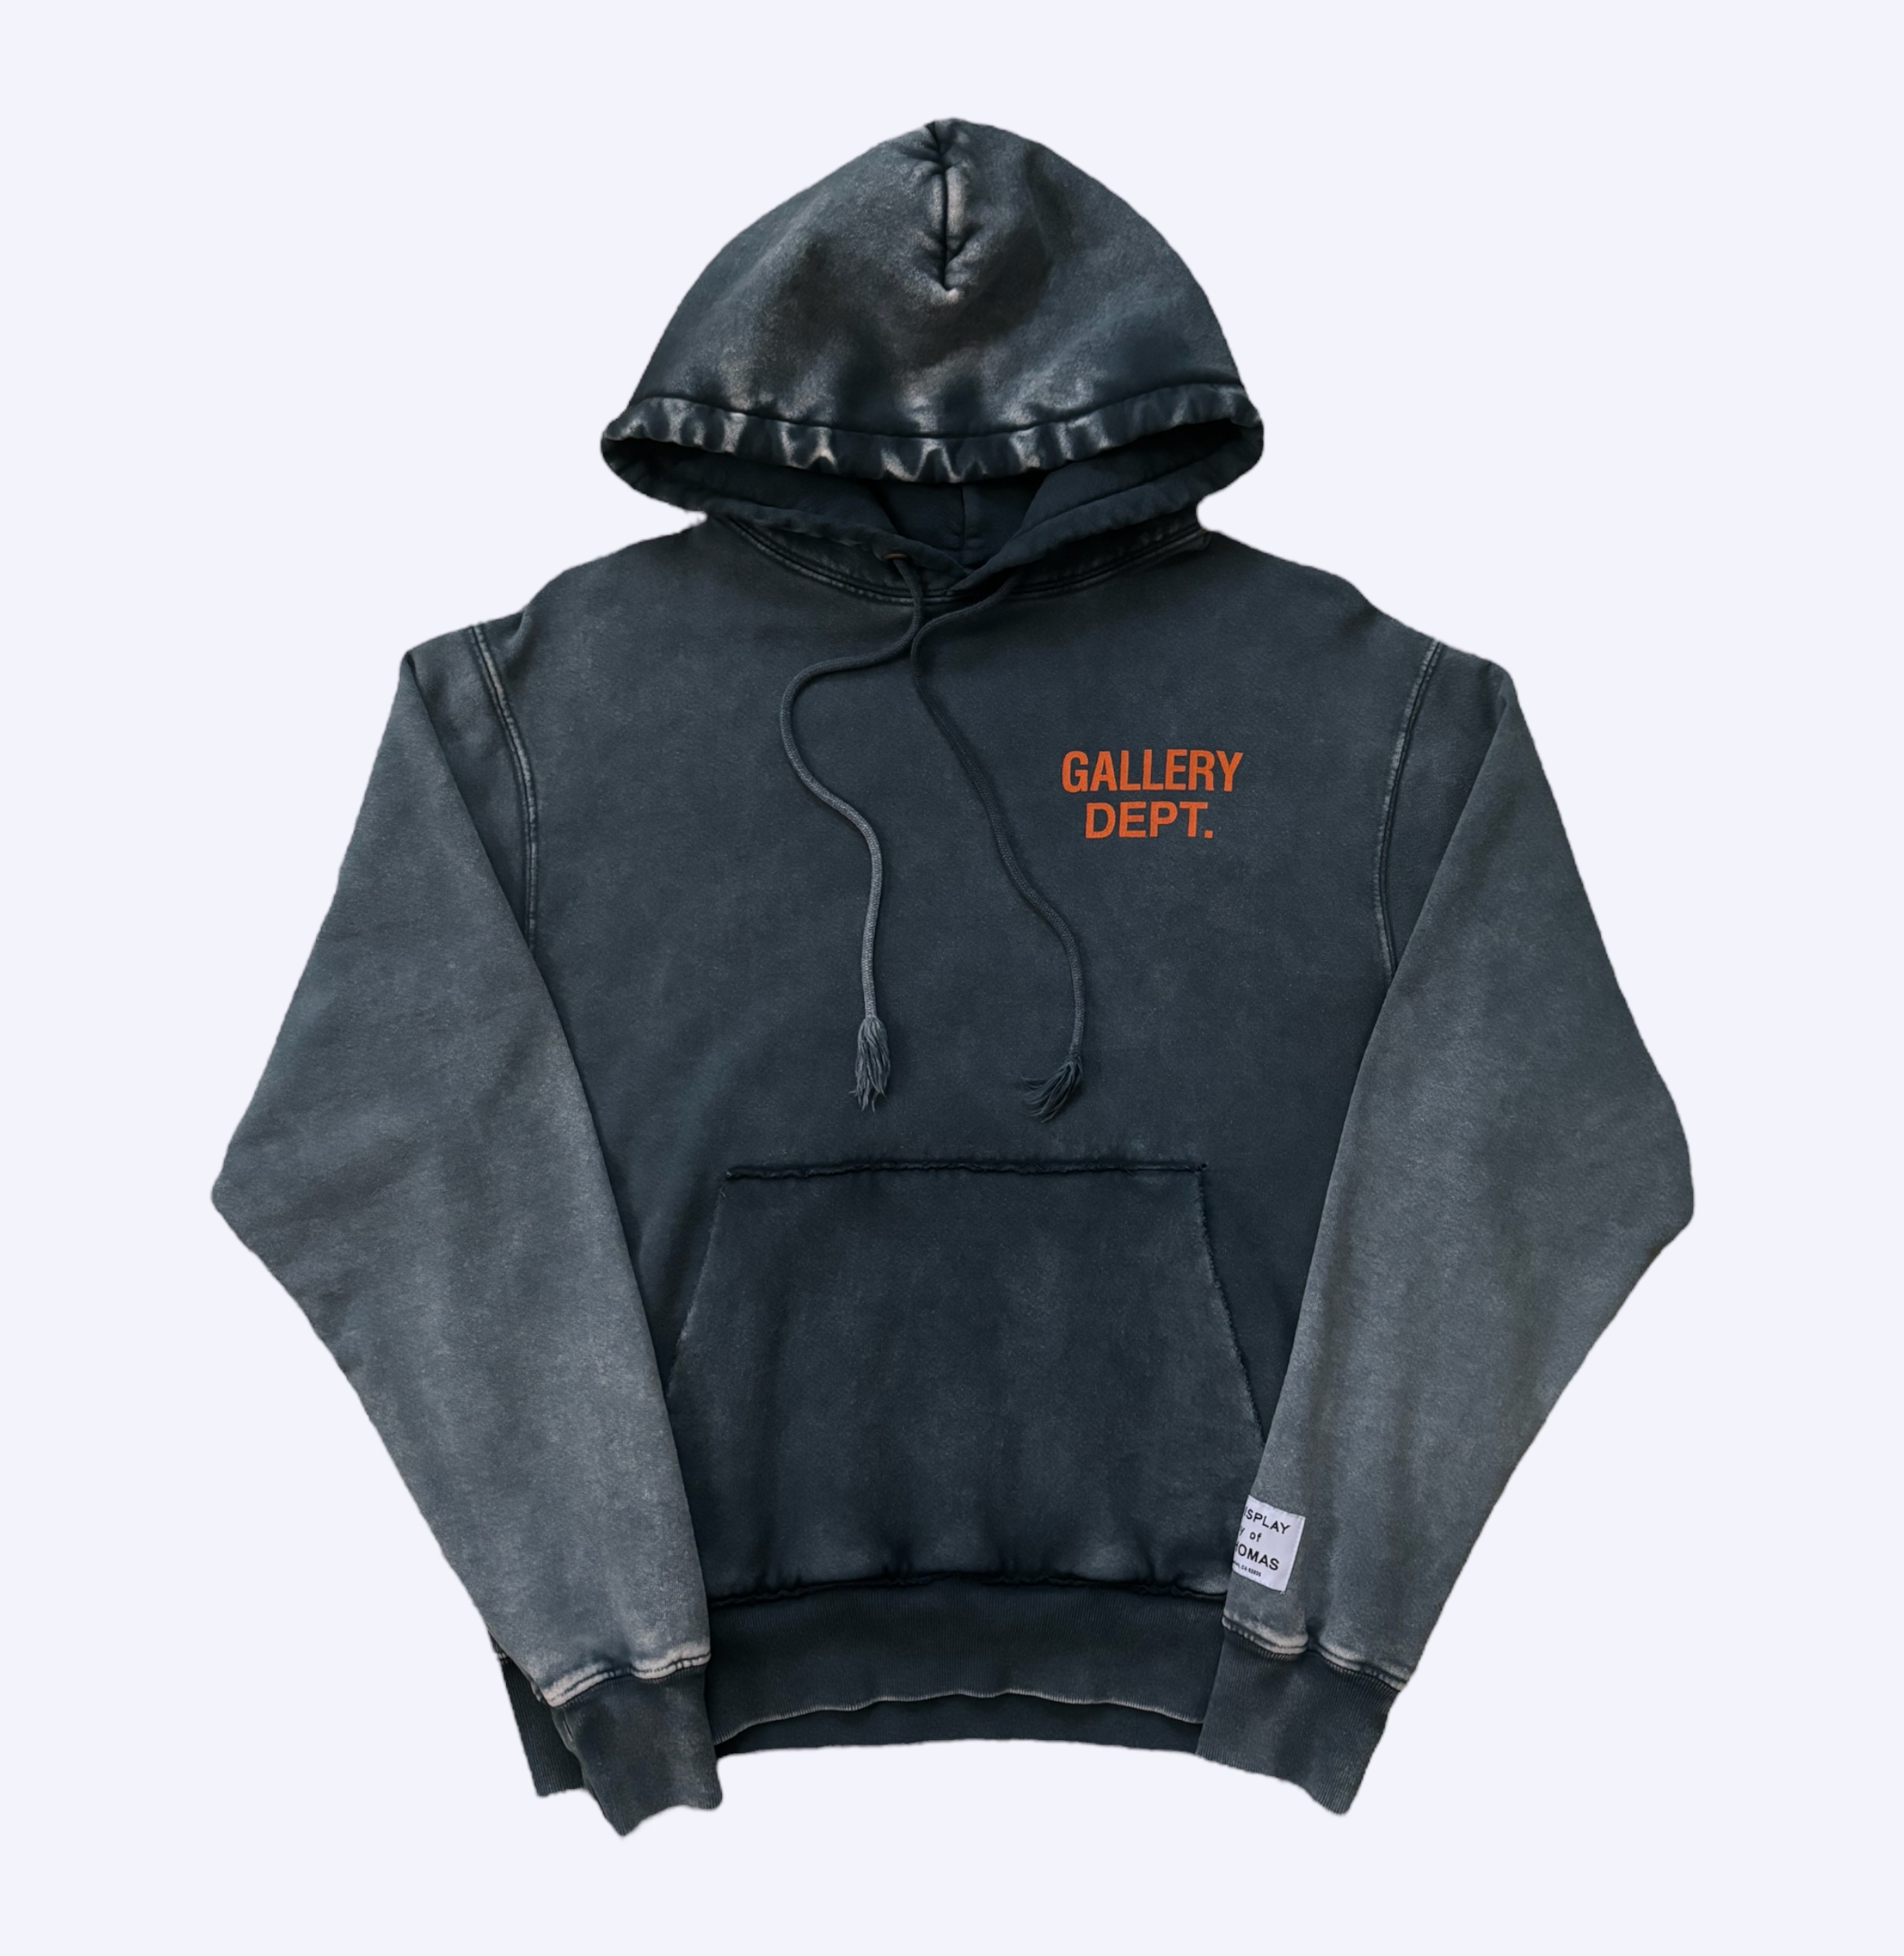 Grey/Washed Gallery Dept. Hoodie w Orange Gallery Logo.